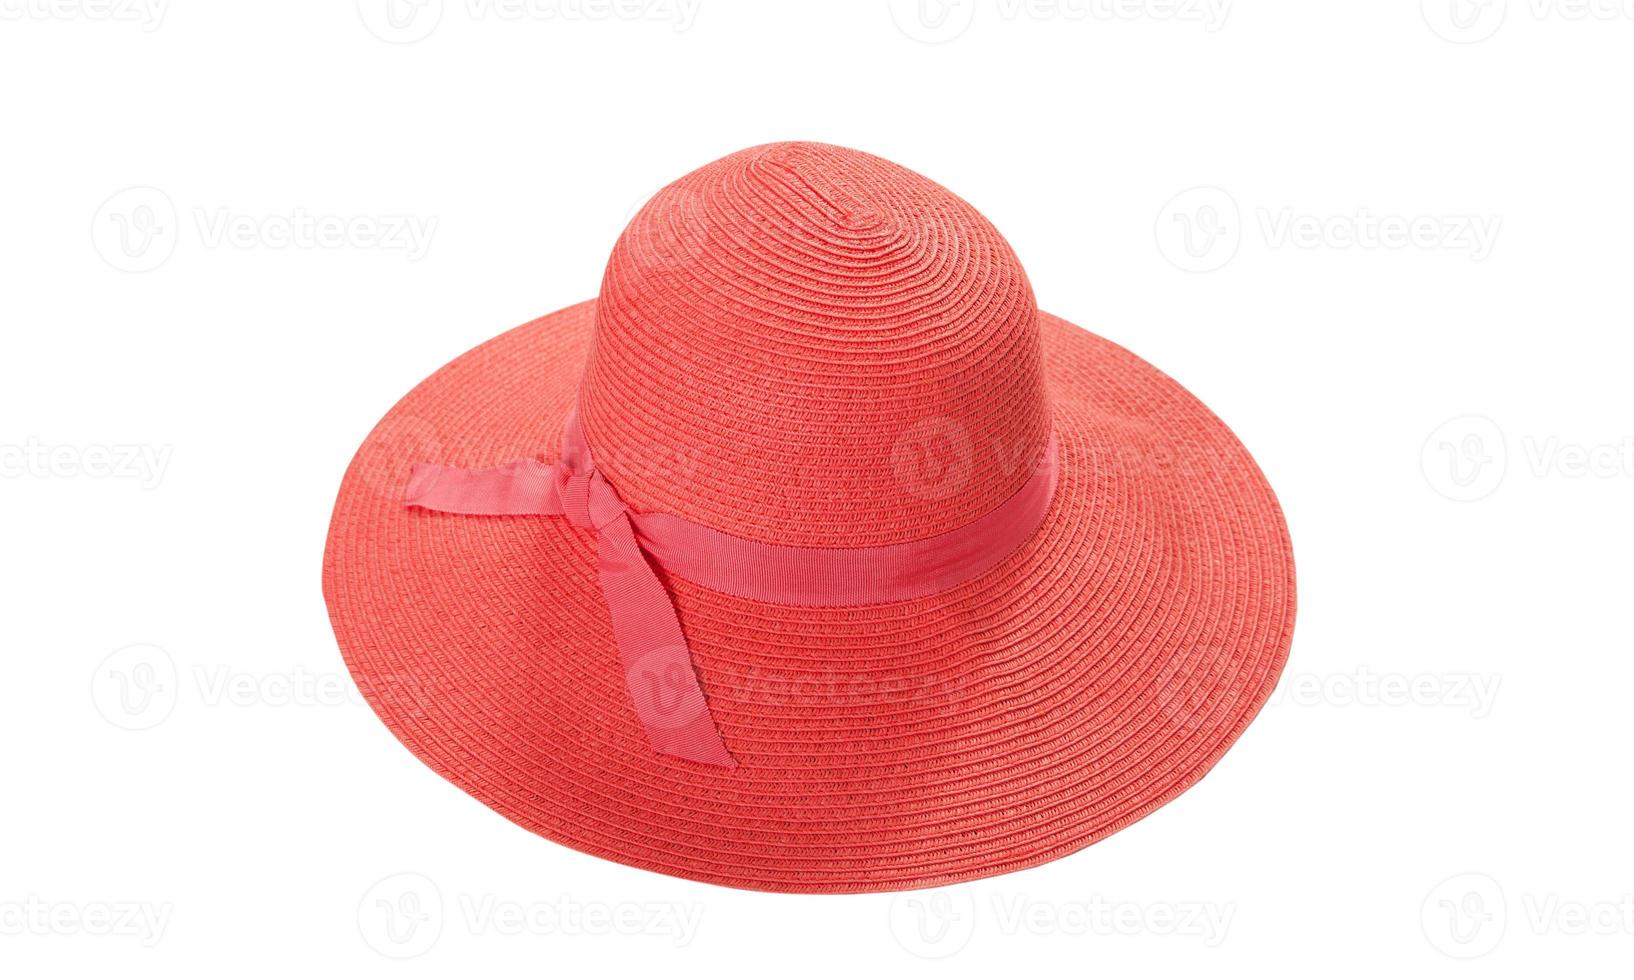 mooi rietje hoed met lint en boog Aan wit achtergrond. strand hoed top visie geïsoleerd foto